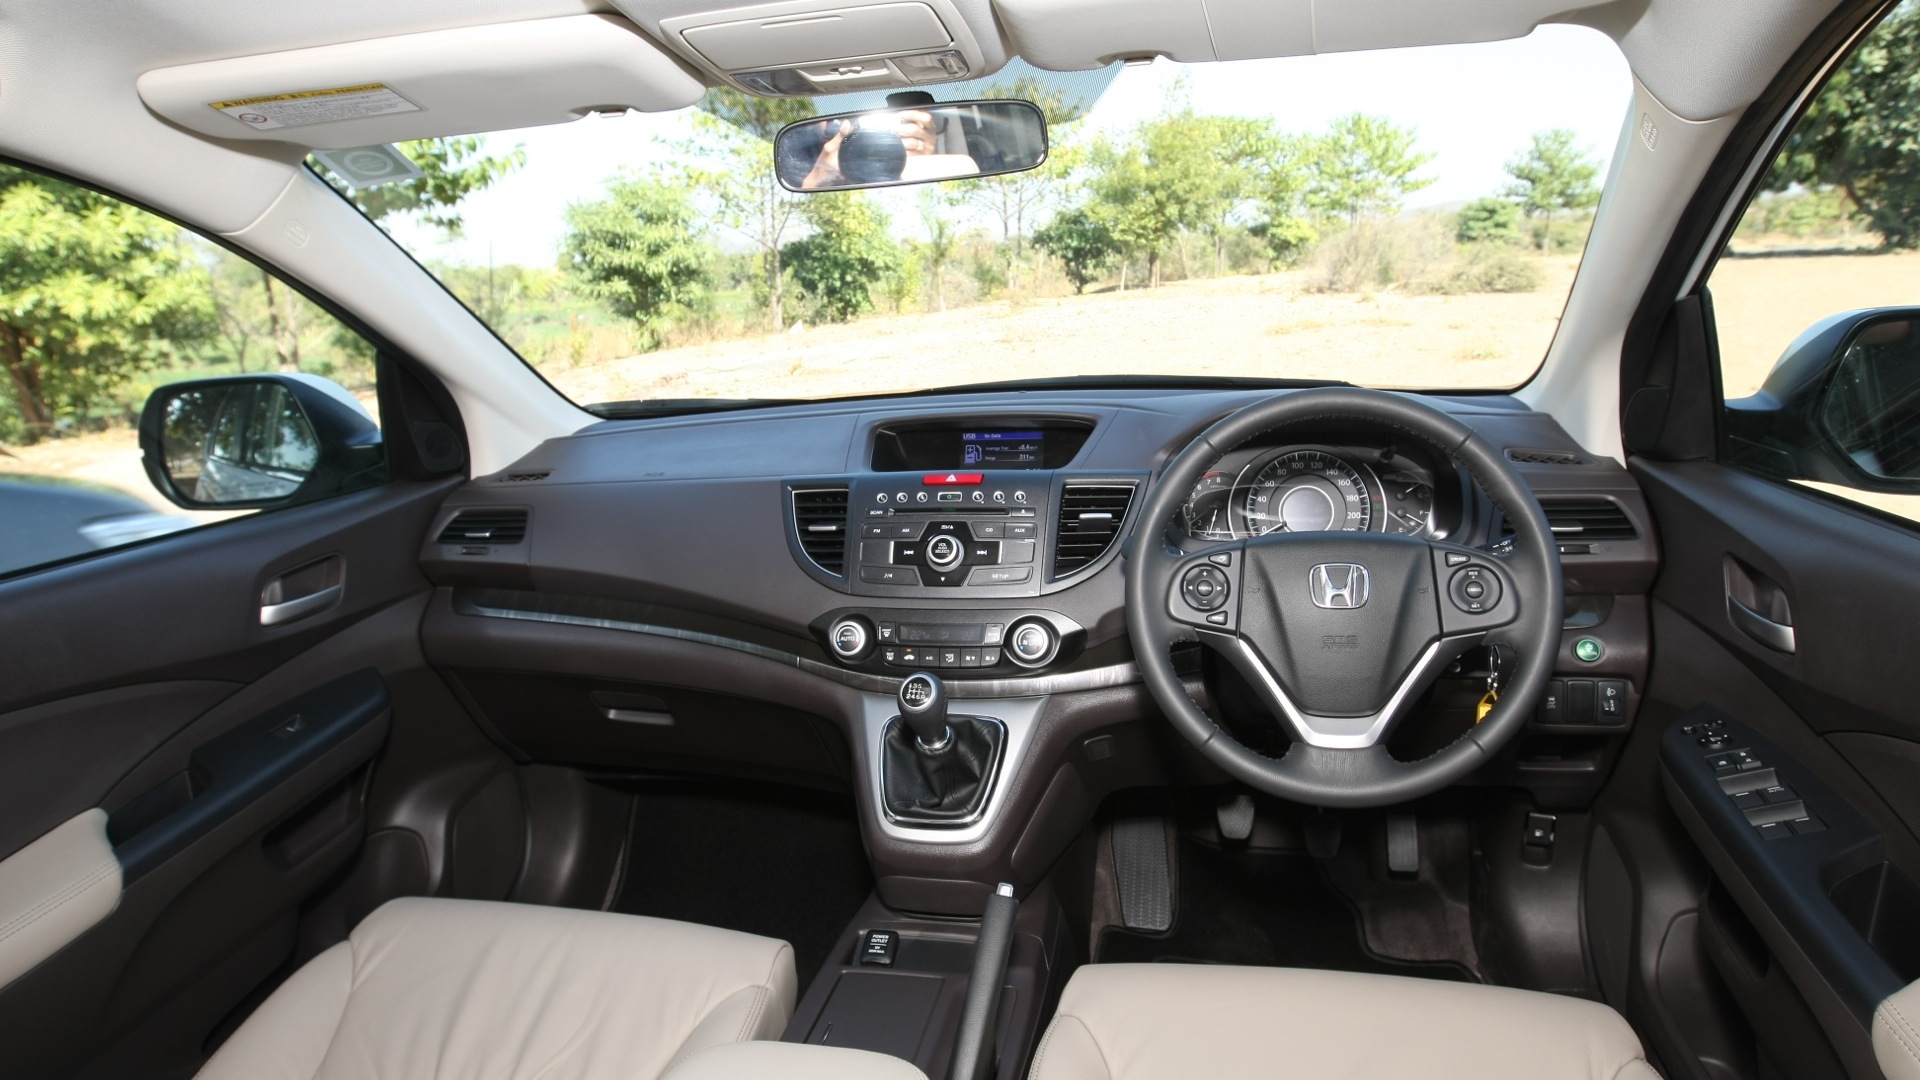 Honda-CRV-2013-CR-V-2-0-Compare